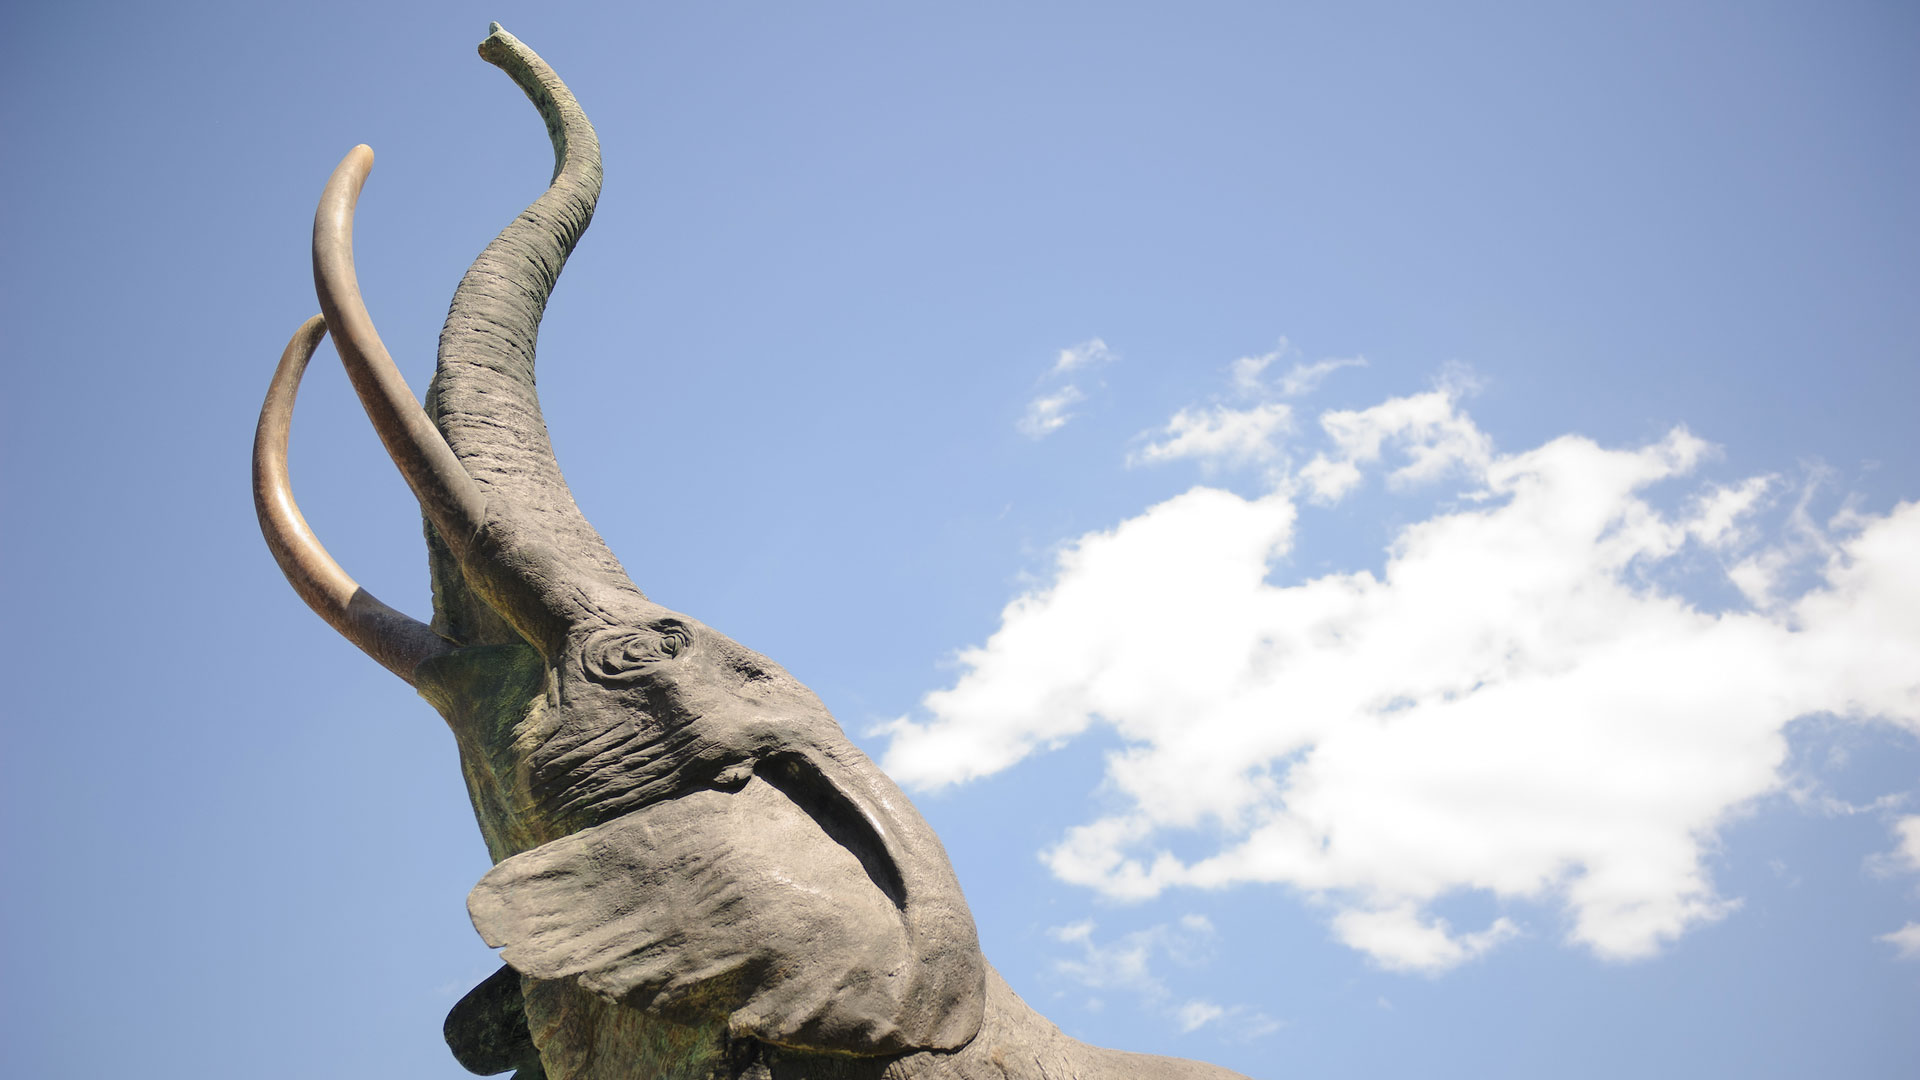 photograph of the head of the bronze elephant statue named Tuska